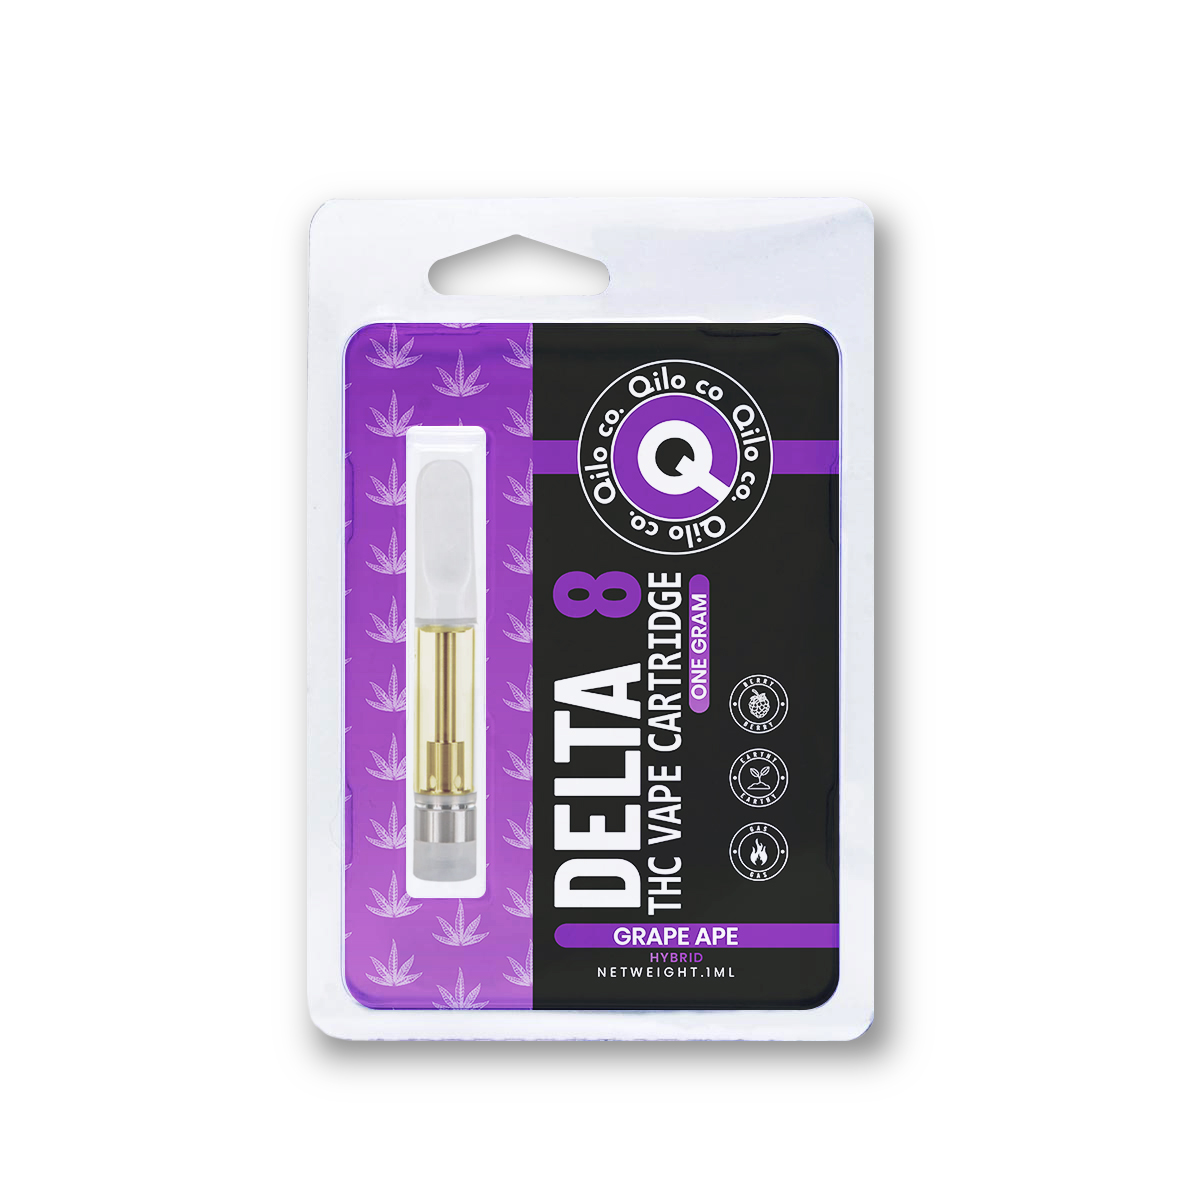 Download Grape Ape Delta 8 Vape Cartridge Qilo Co